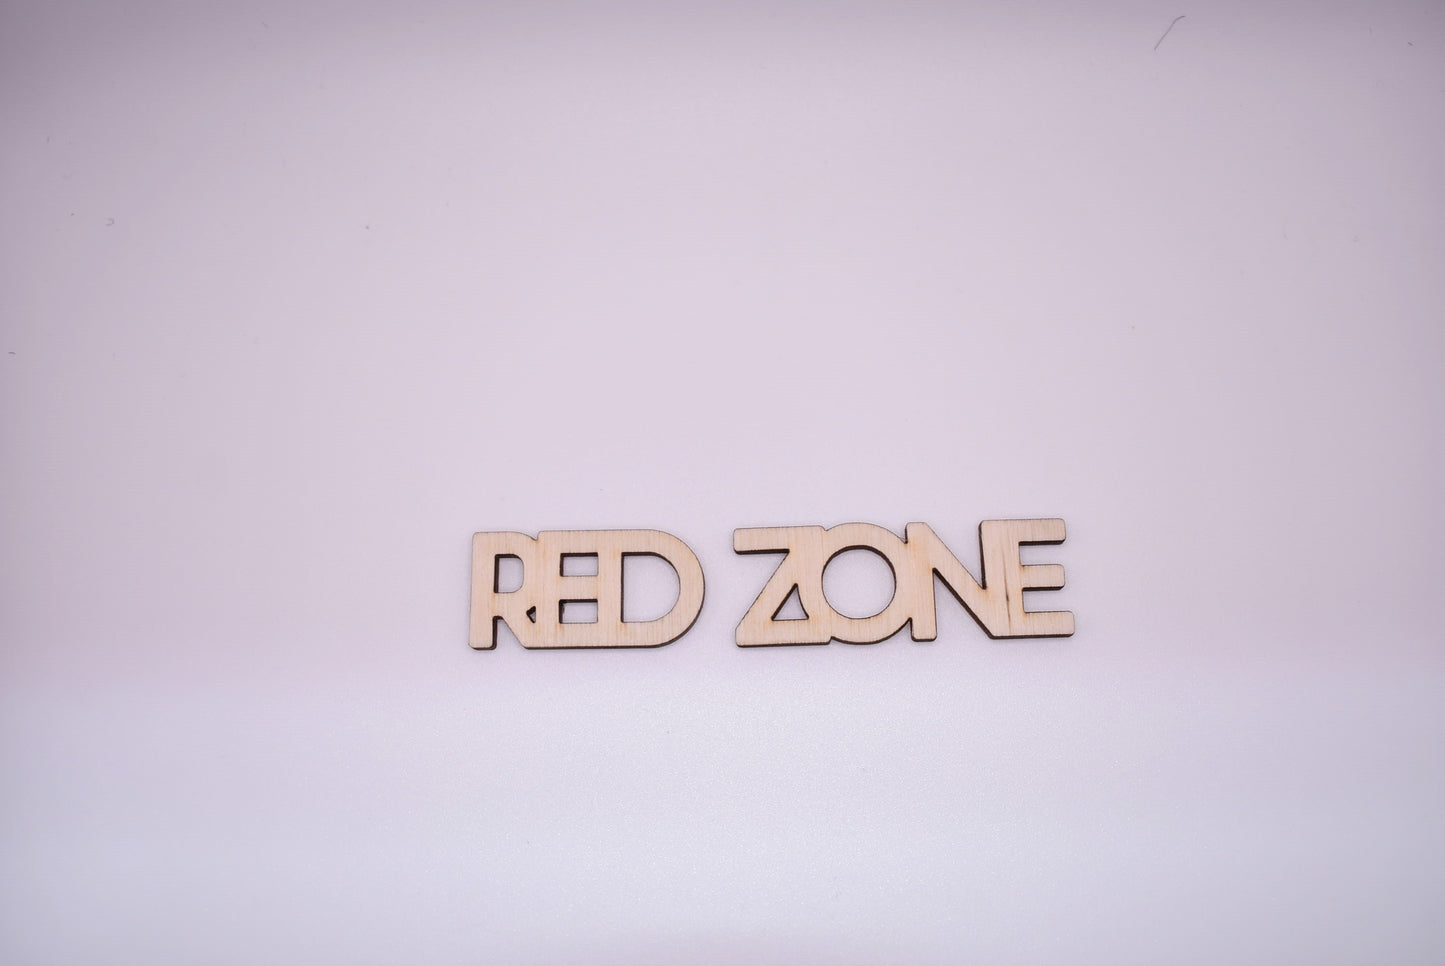 Red Zone - Creative Designs By Kari